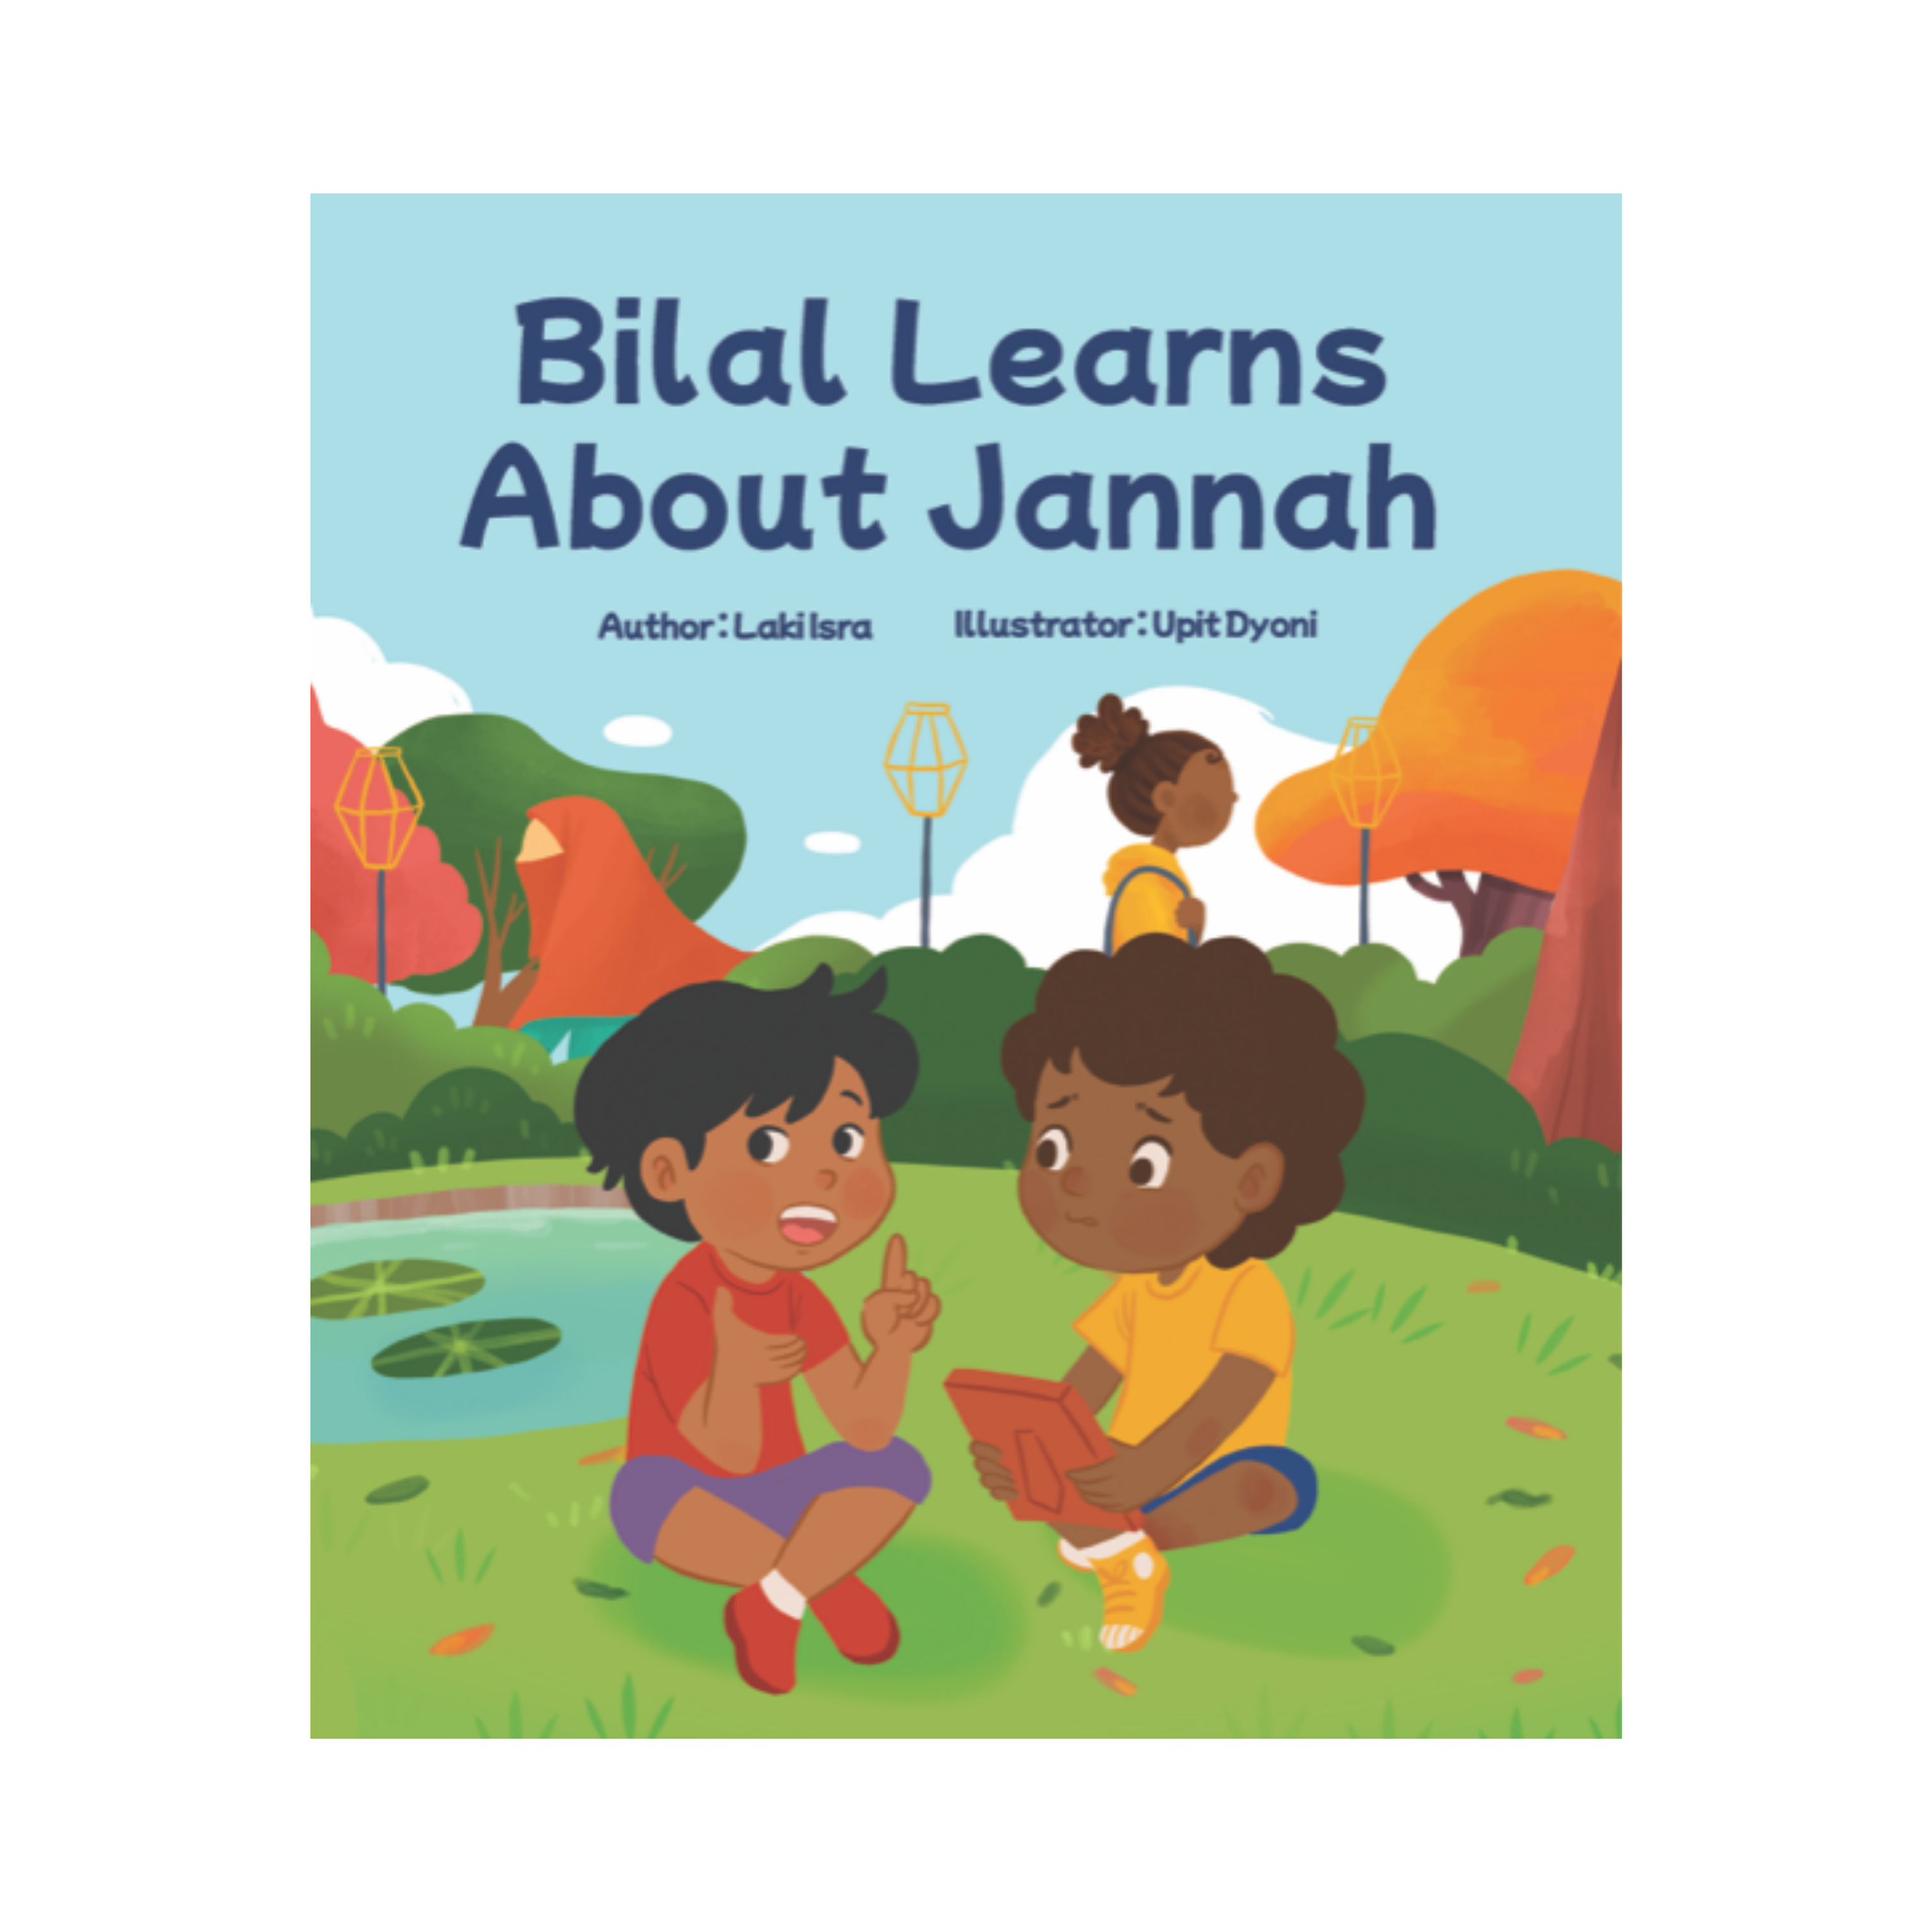 Bilal Learns About Jannah - Laki Isra (Author), Upit Dyoni (Illustrator)